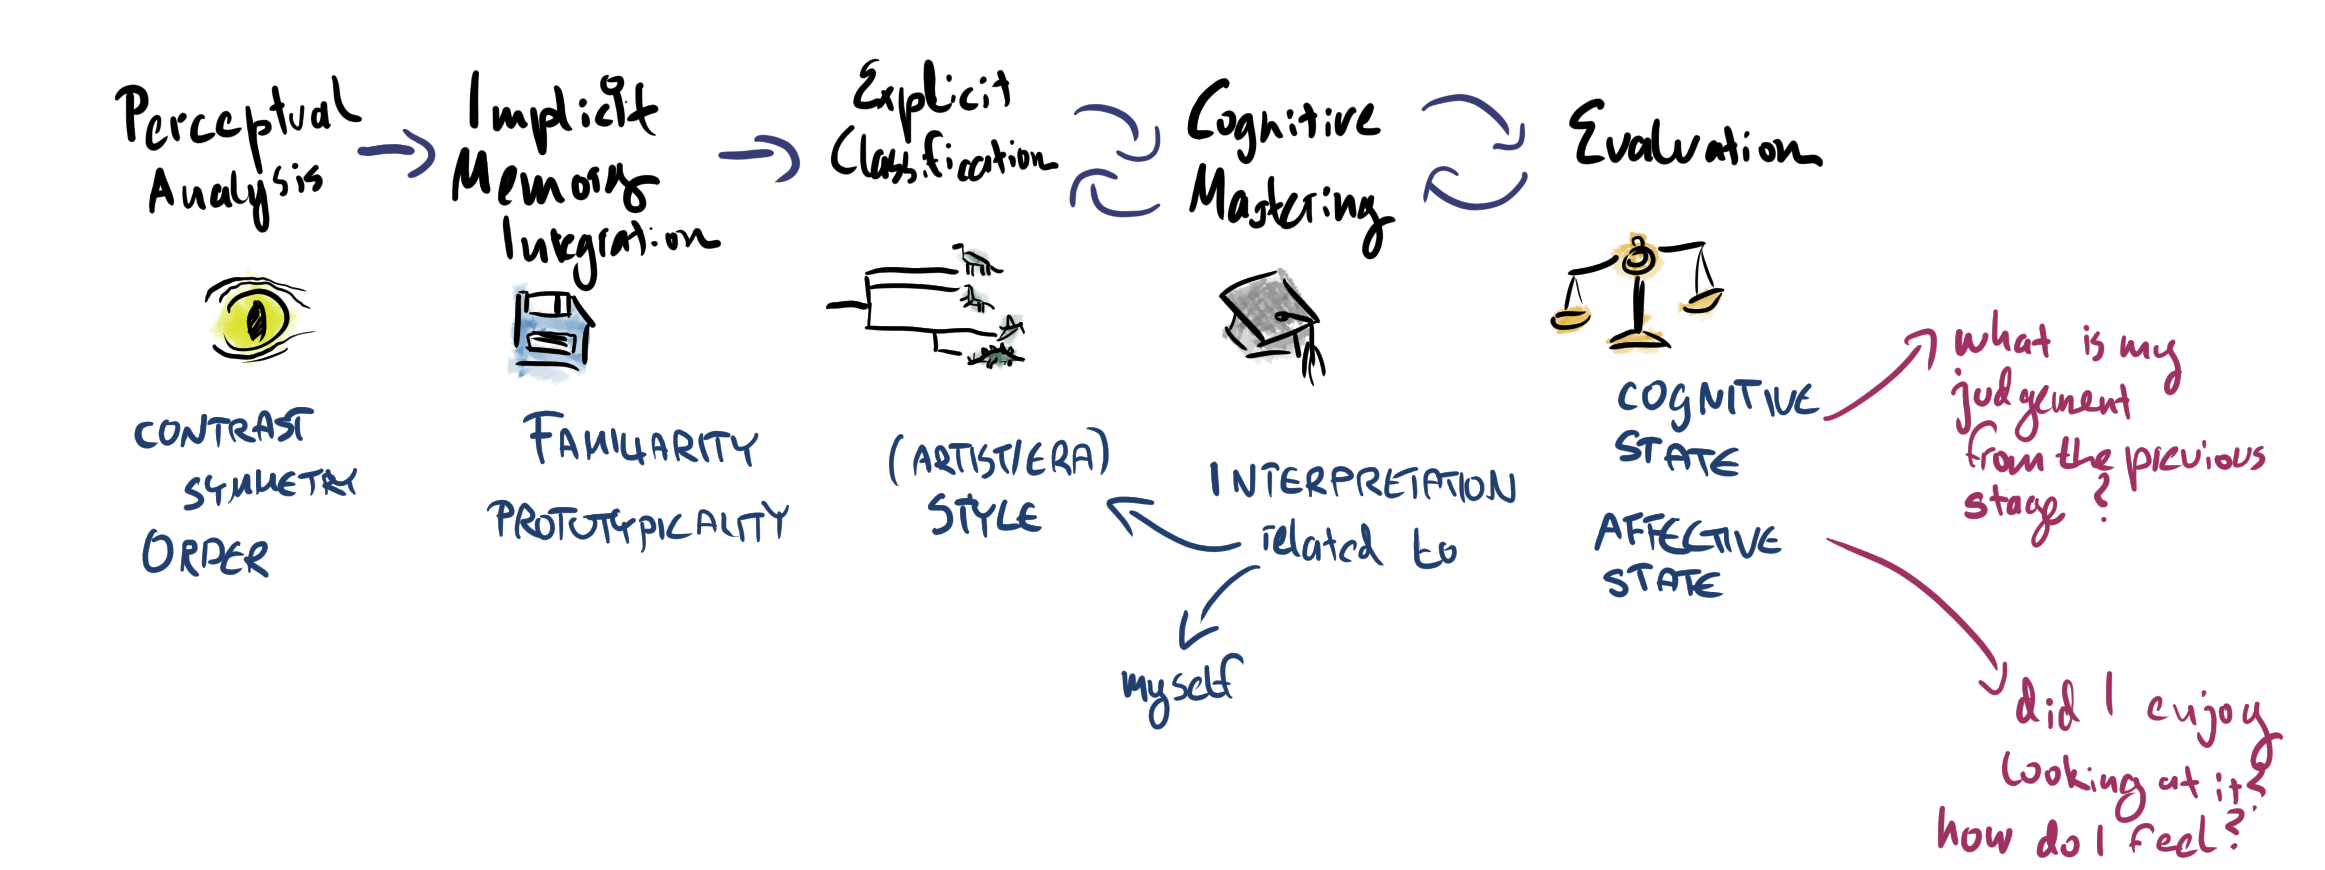 Simplified diagram of the five stages of Leder's model as described below